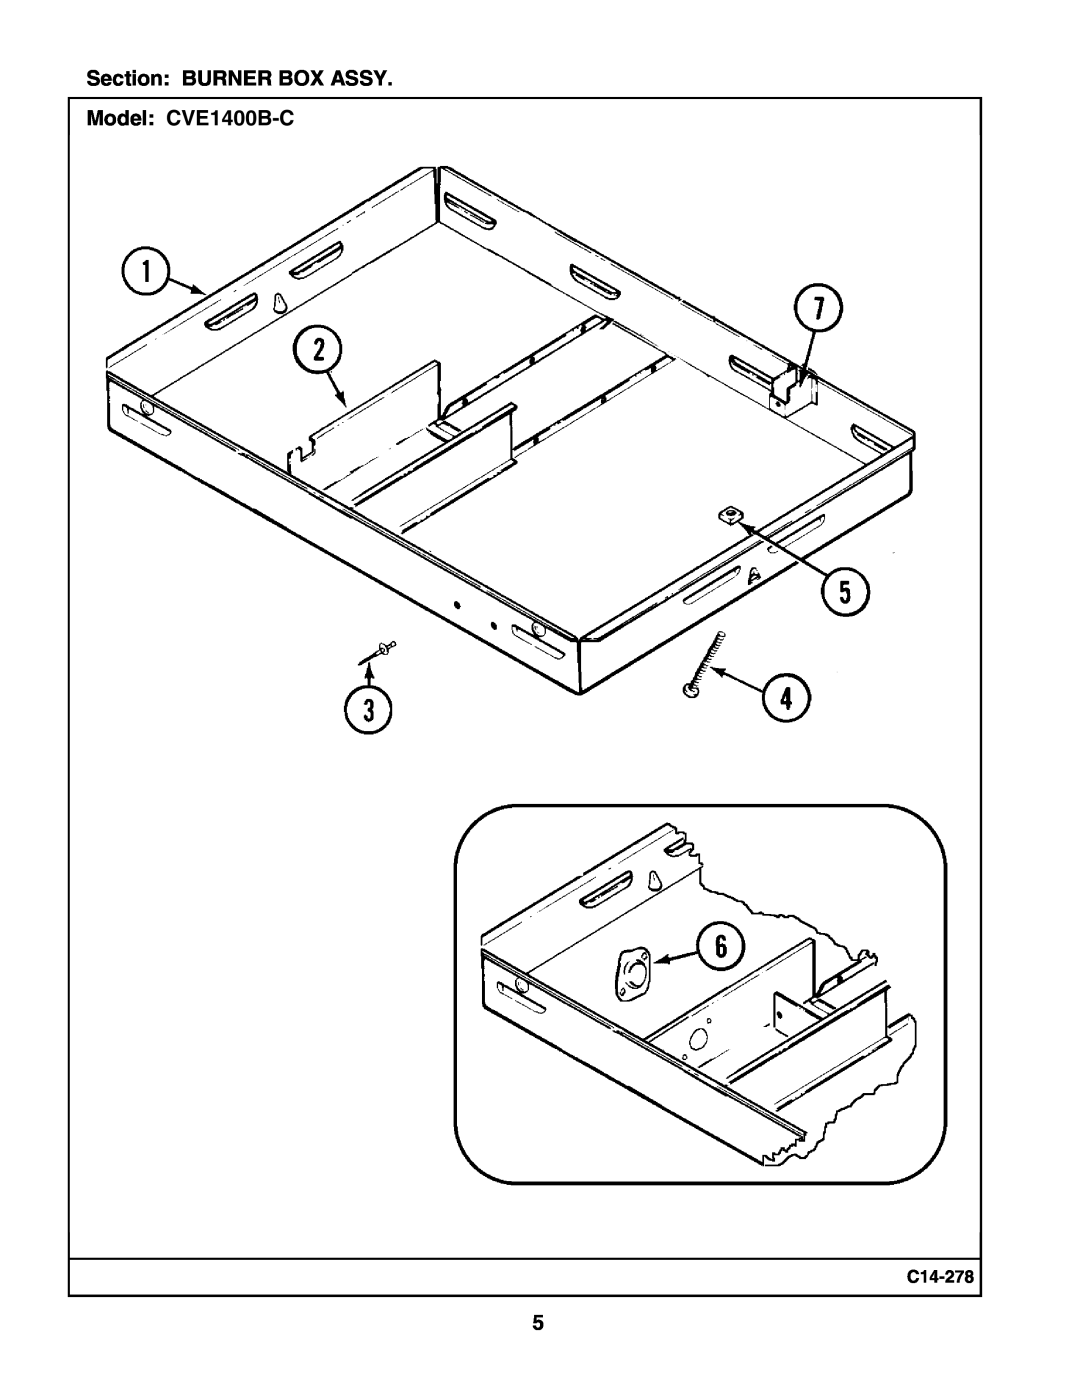 Whirlpool manual Section BURNER BOX ASSY Model CVE1400B-C, C14-278 